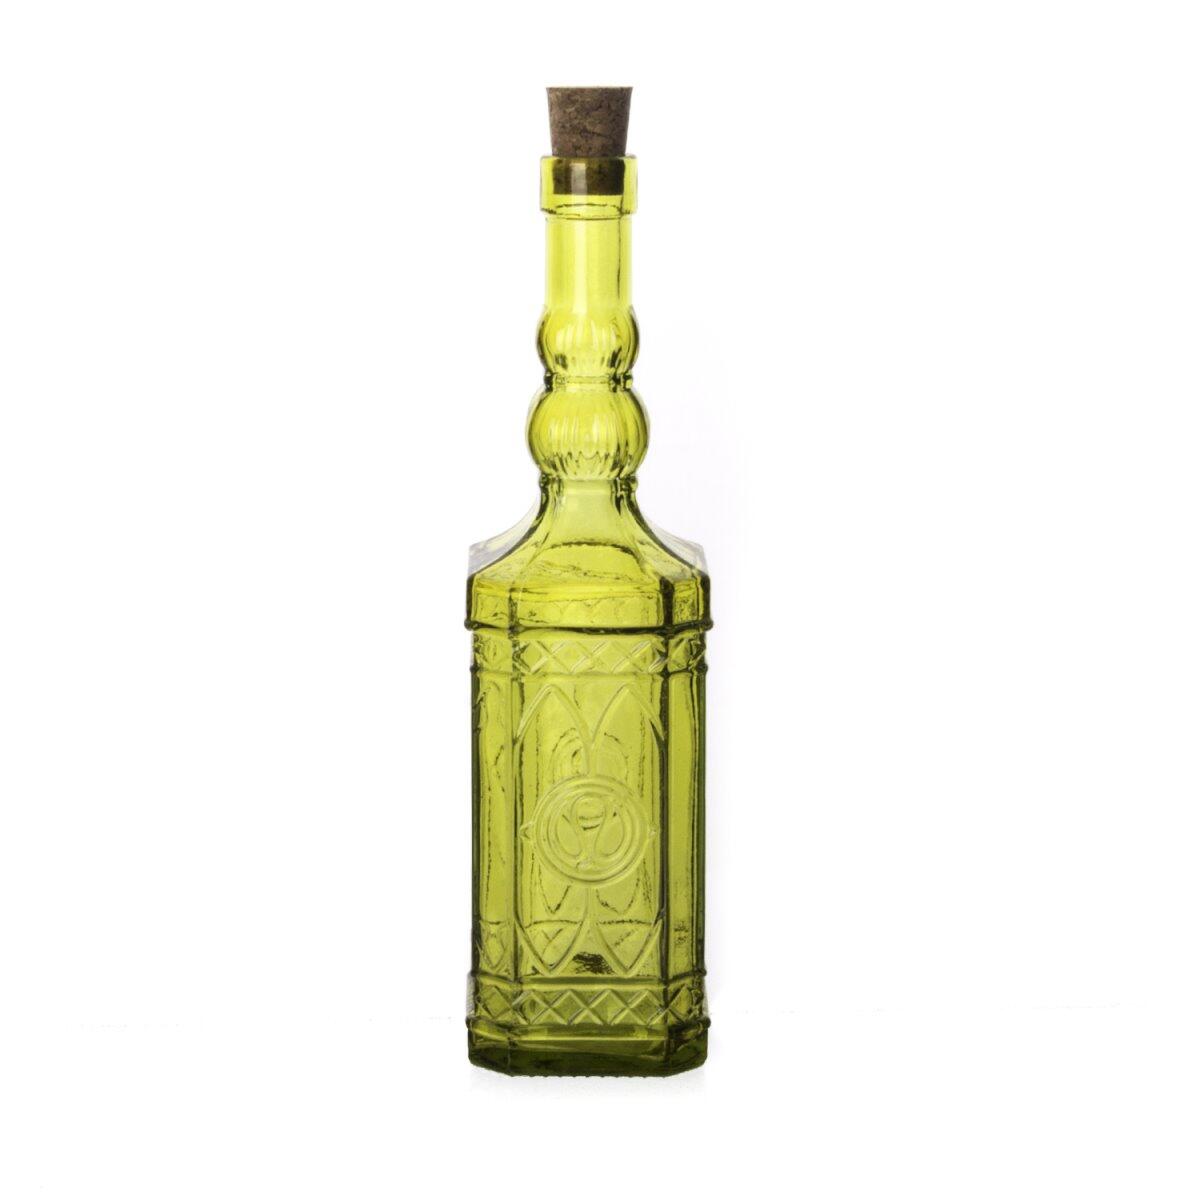 Sanmiguel Miguelete Oil Bottle 500 ml